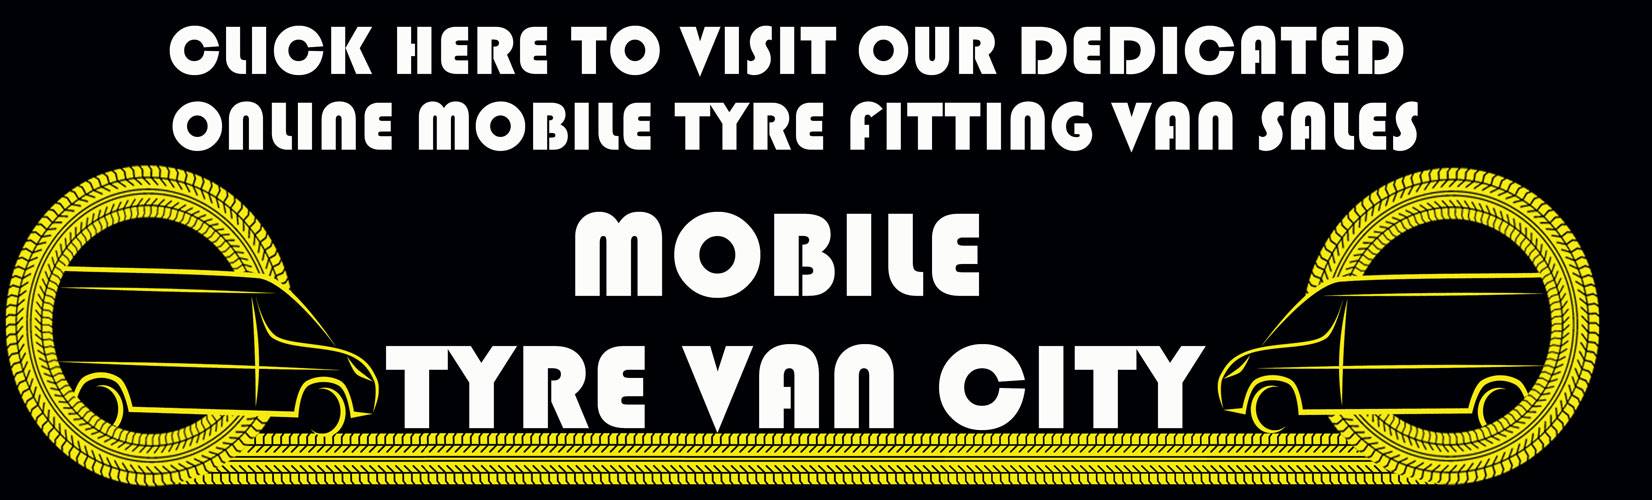 Link to mobile tyre van city